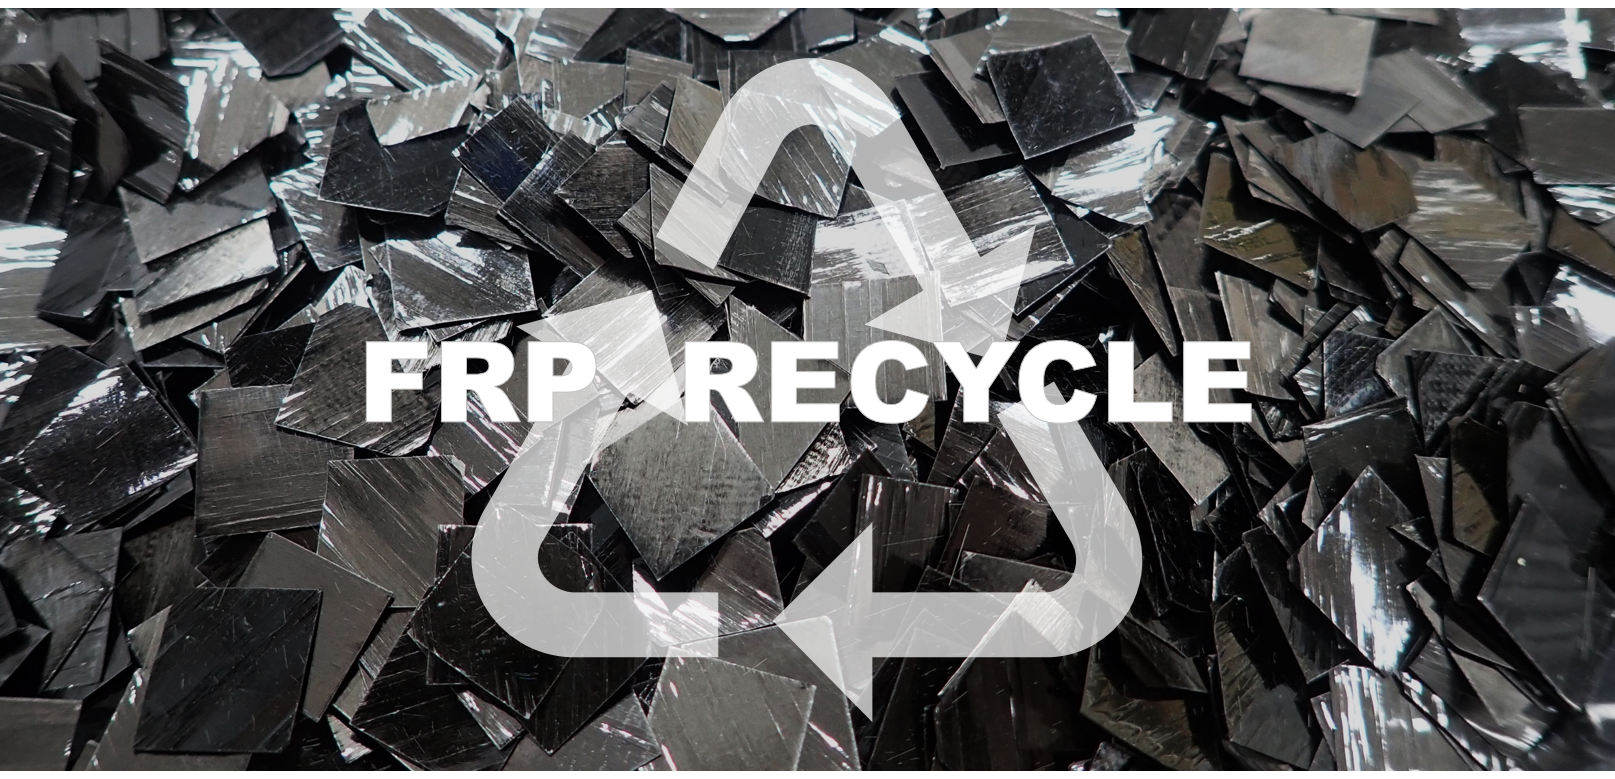 CFRTP recycling technology using molding process